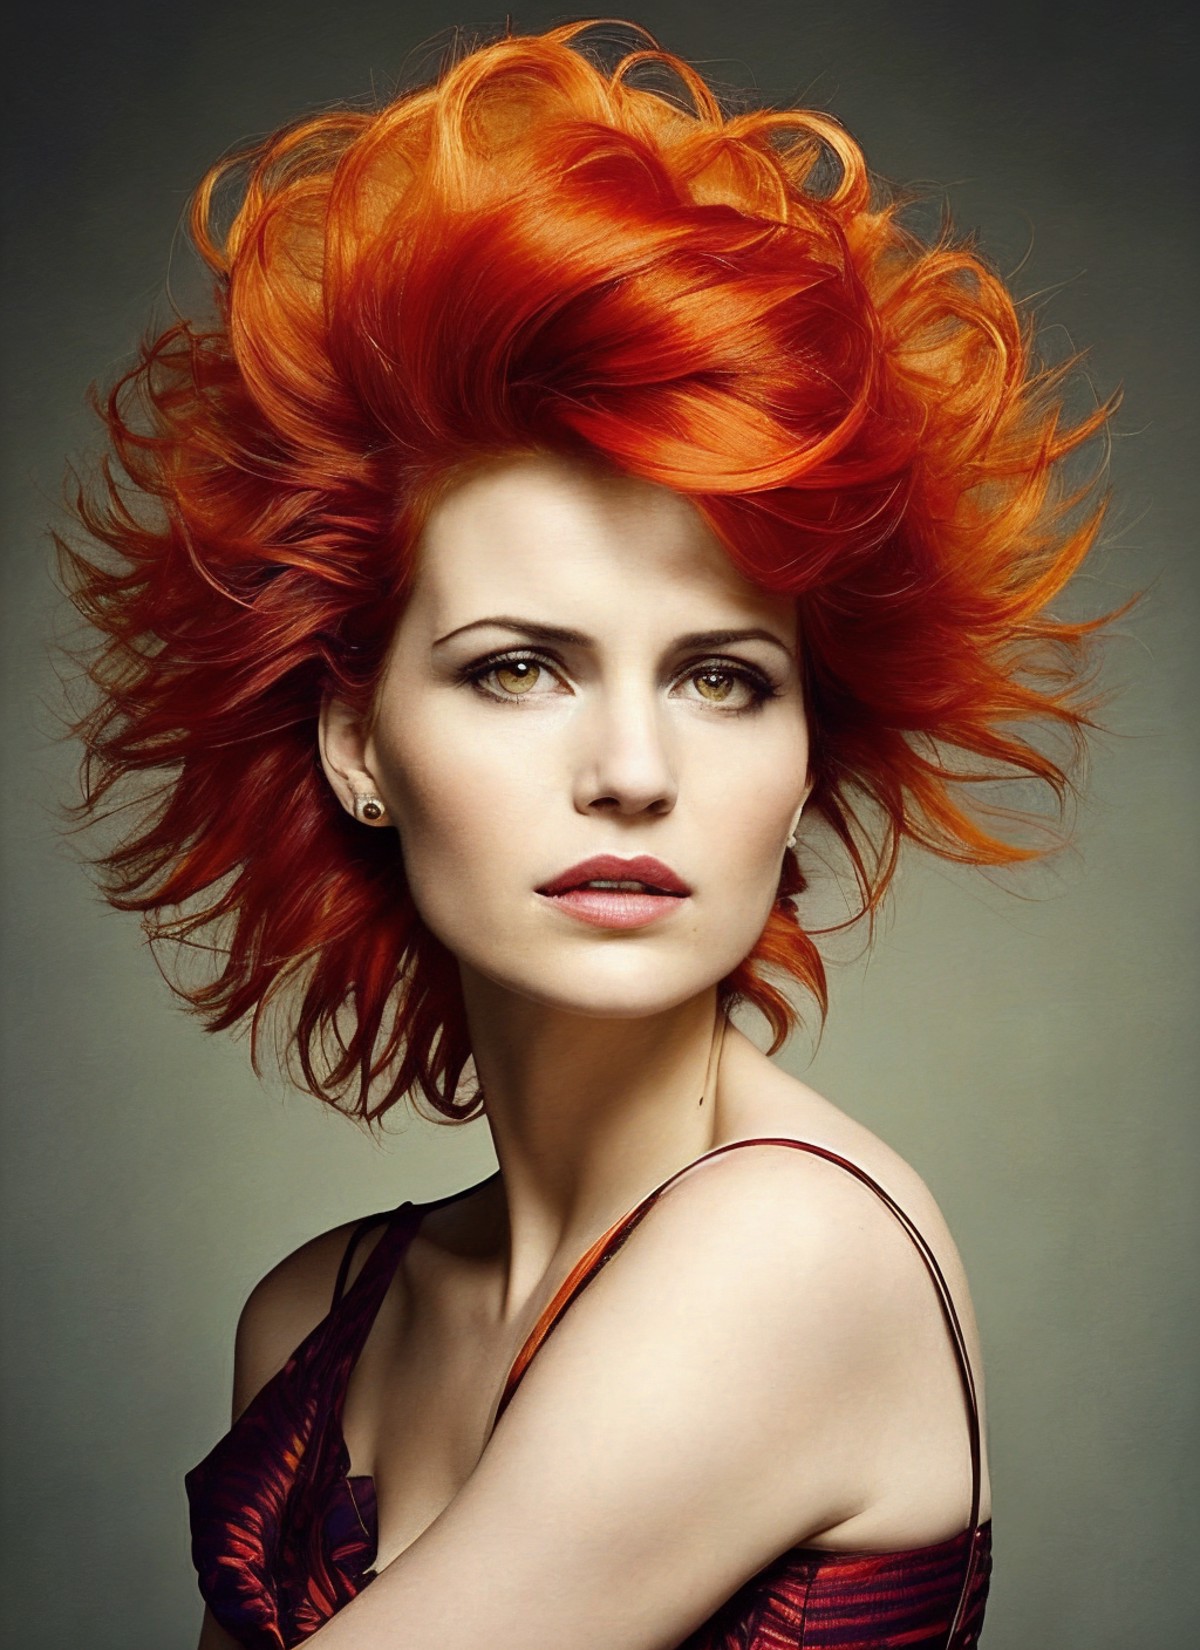 portrait of sks woman by Flora Borsi, style by Flora Borsi, bold, bright colours, orange Mohawk haircut, ((Flora Borsi)), ...